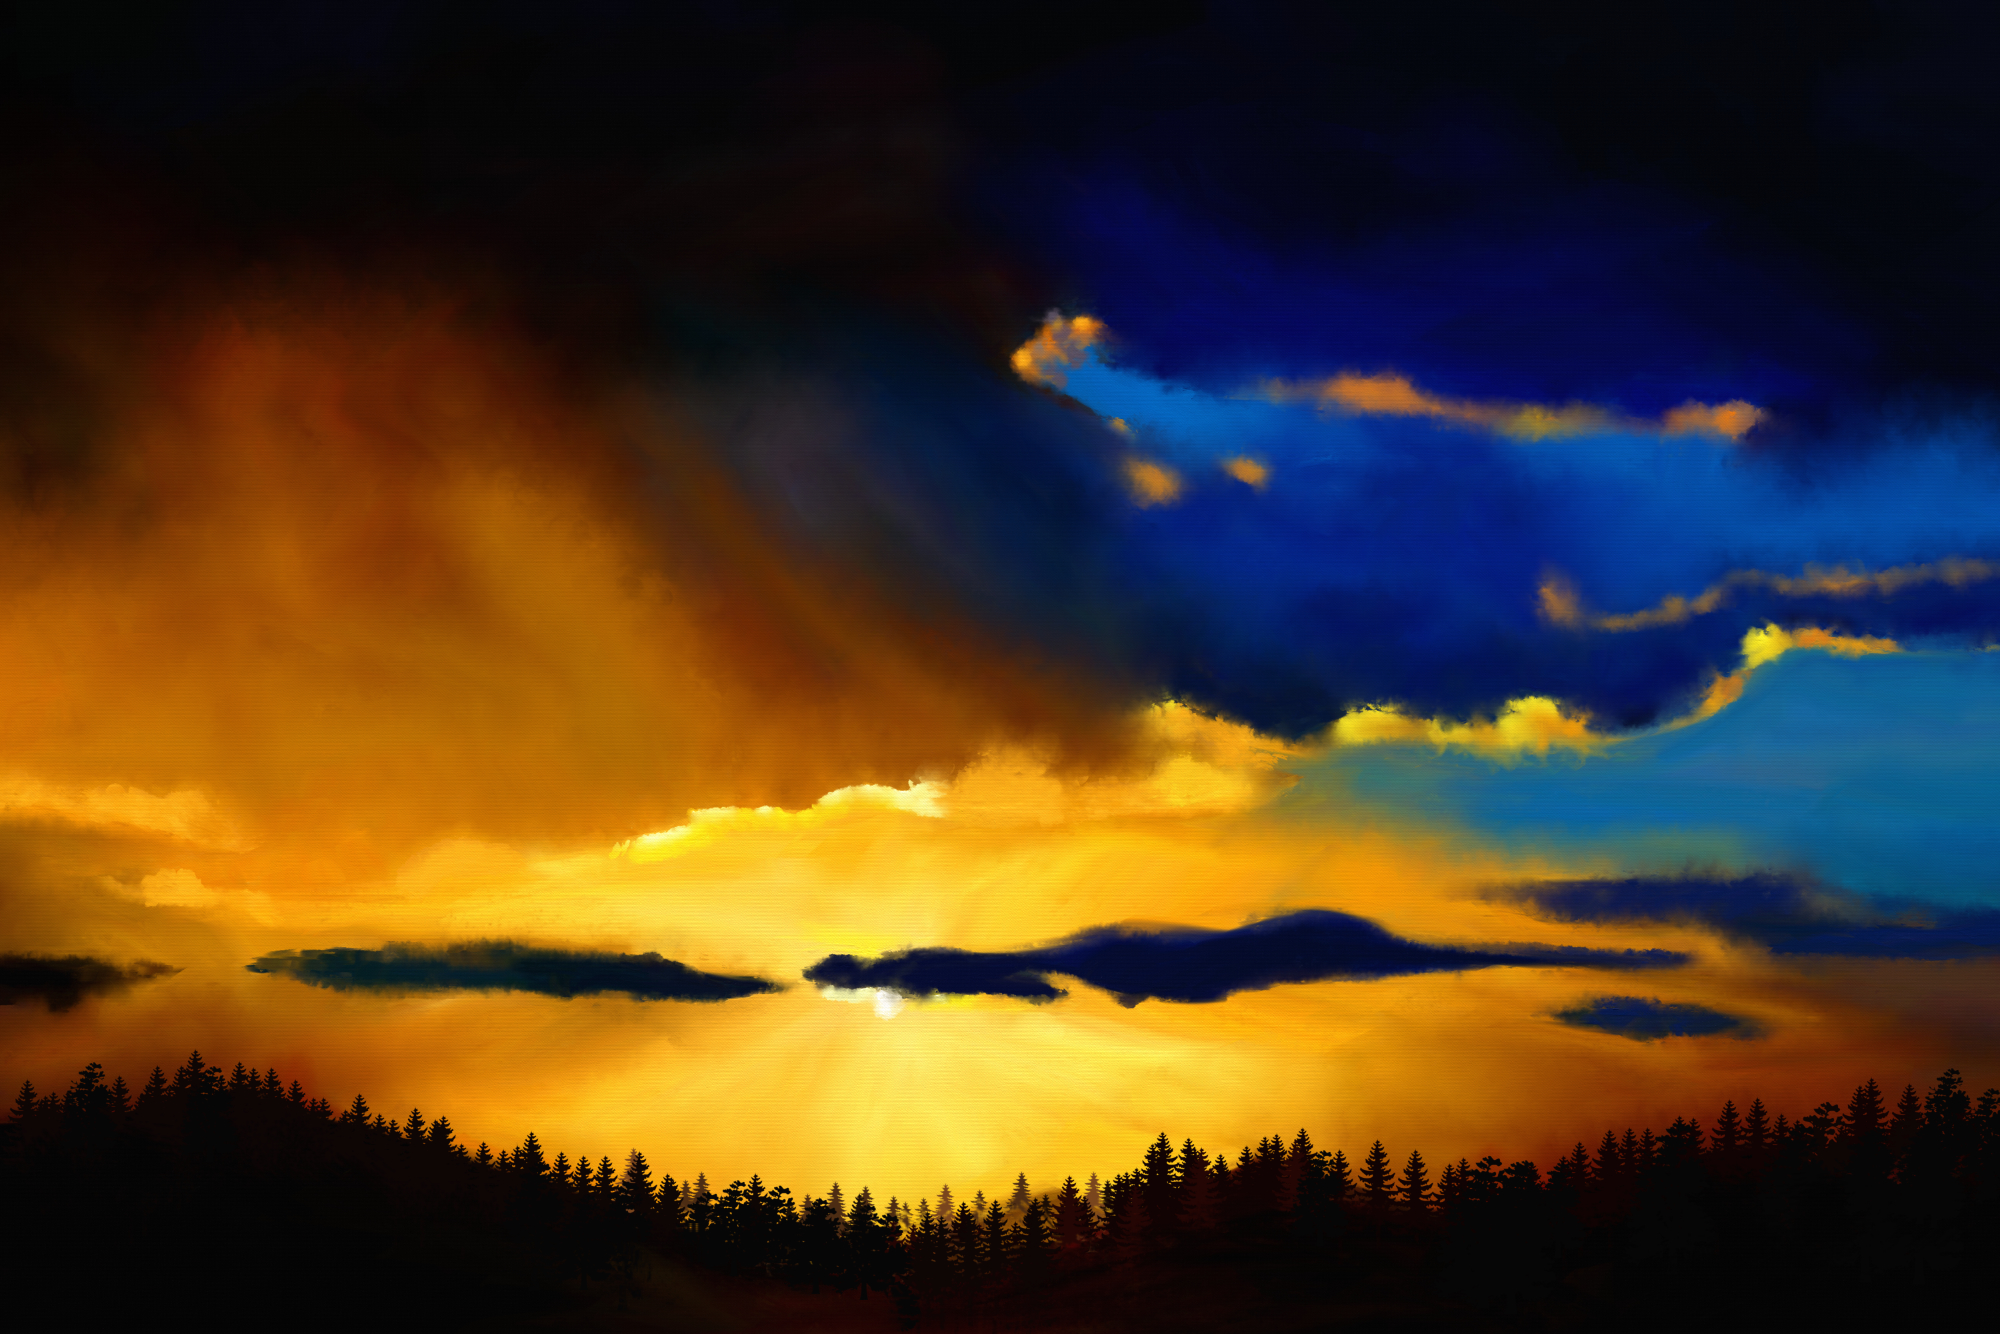 Digital acrylic painting of a sunrise